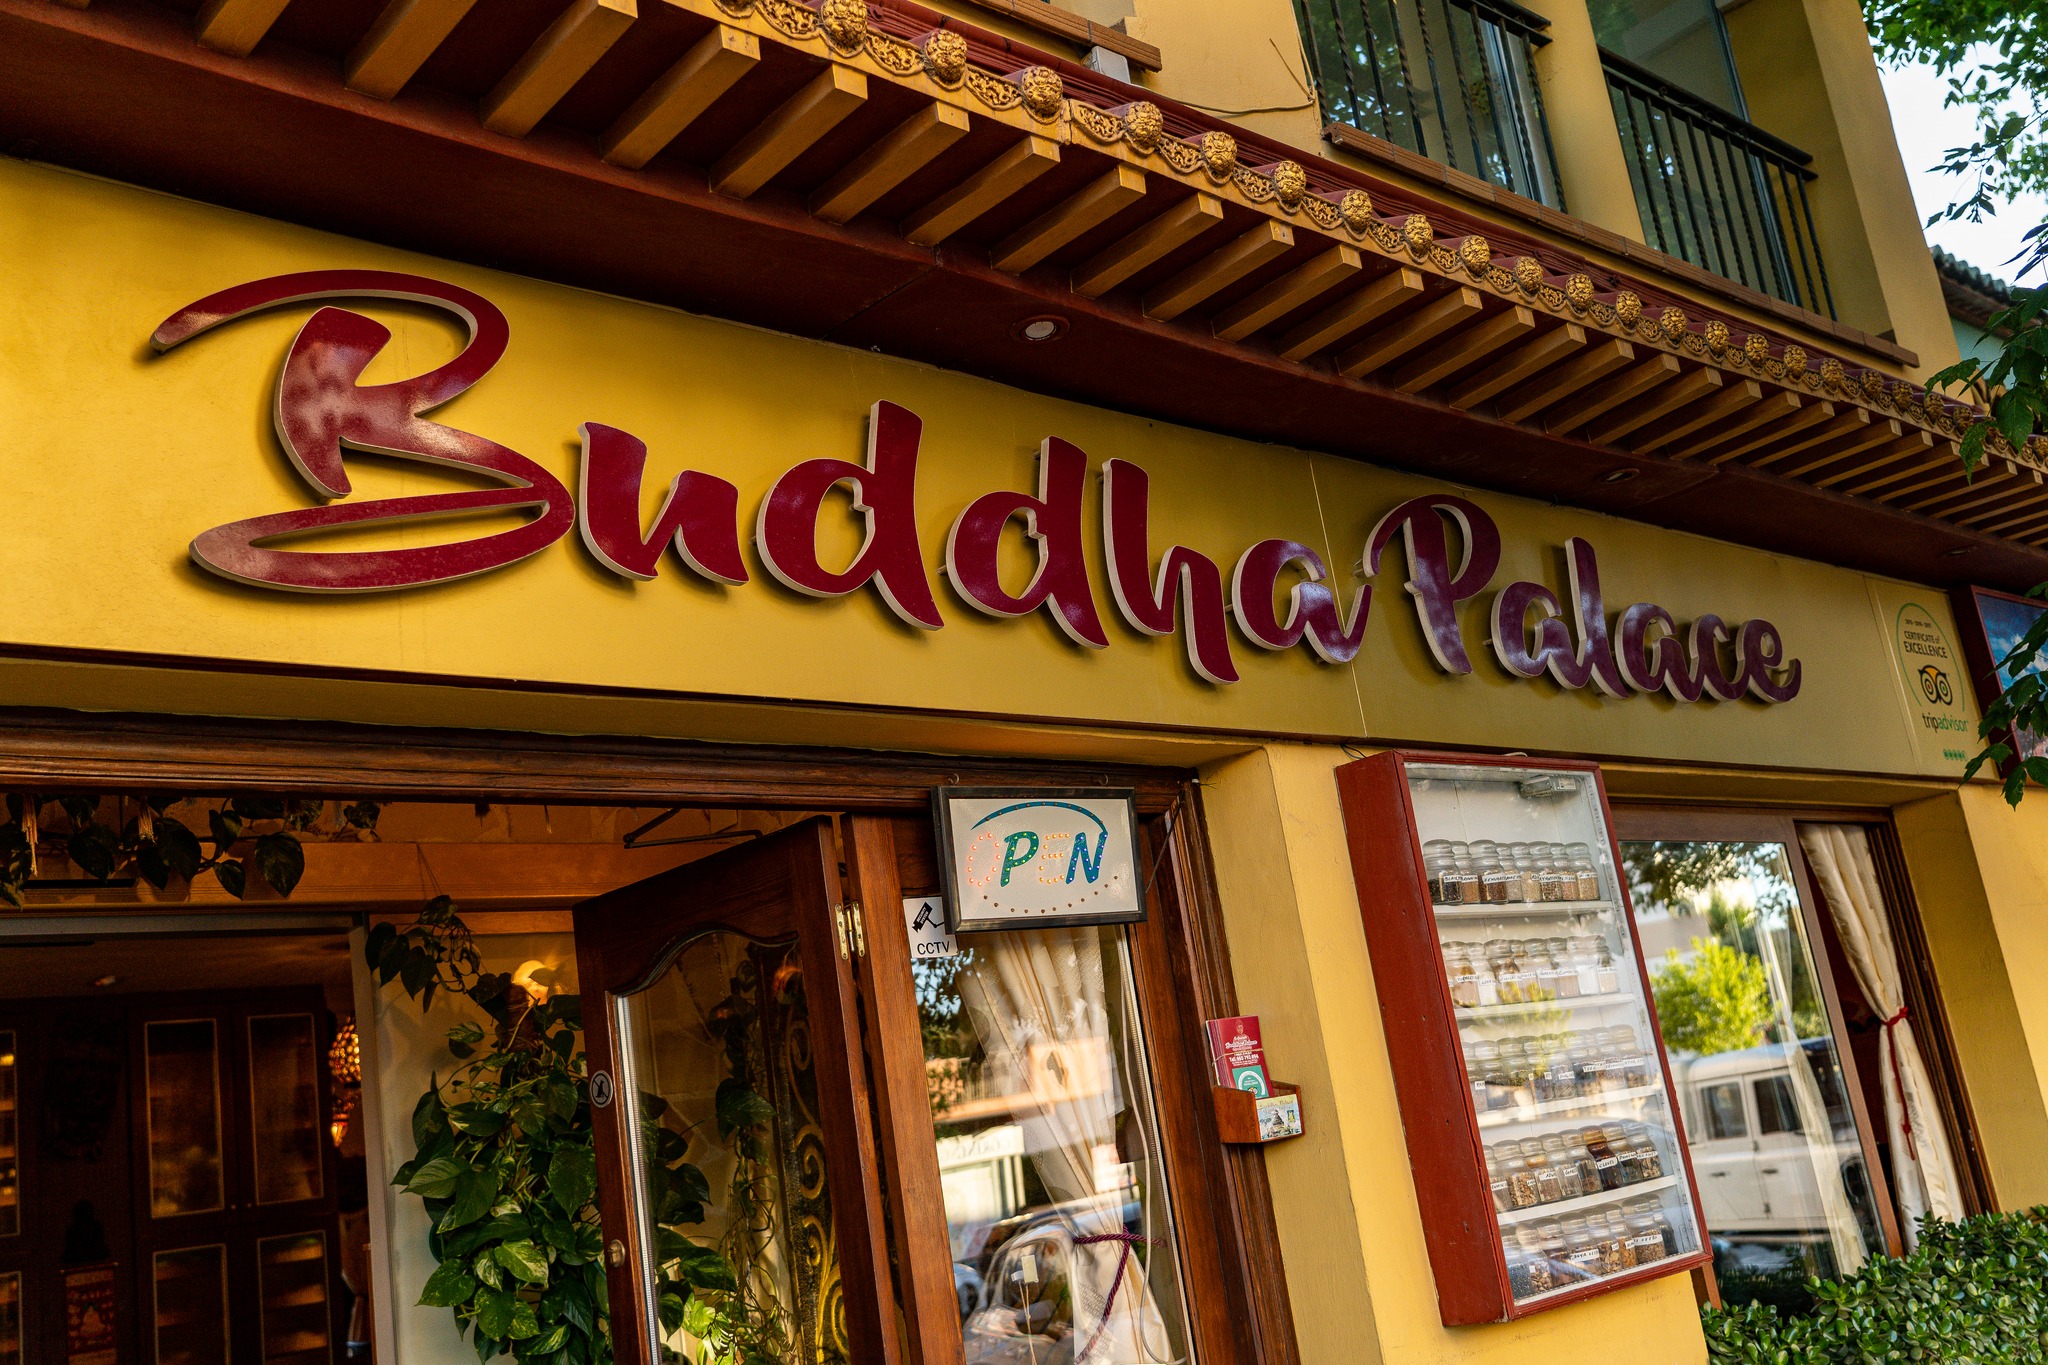 Budda Palace restaurant in Javea